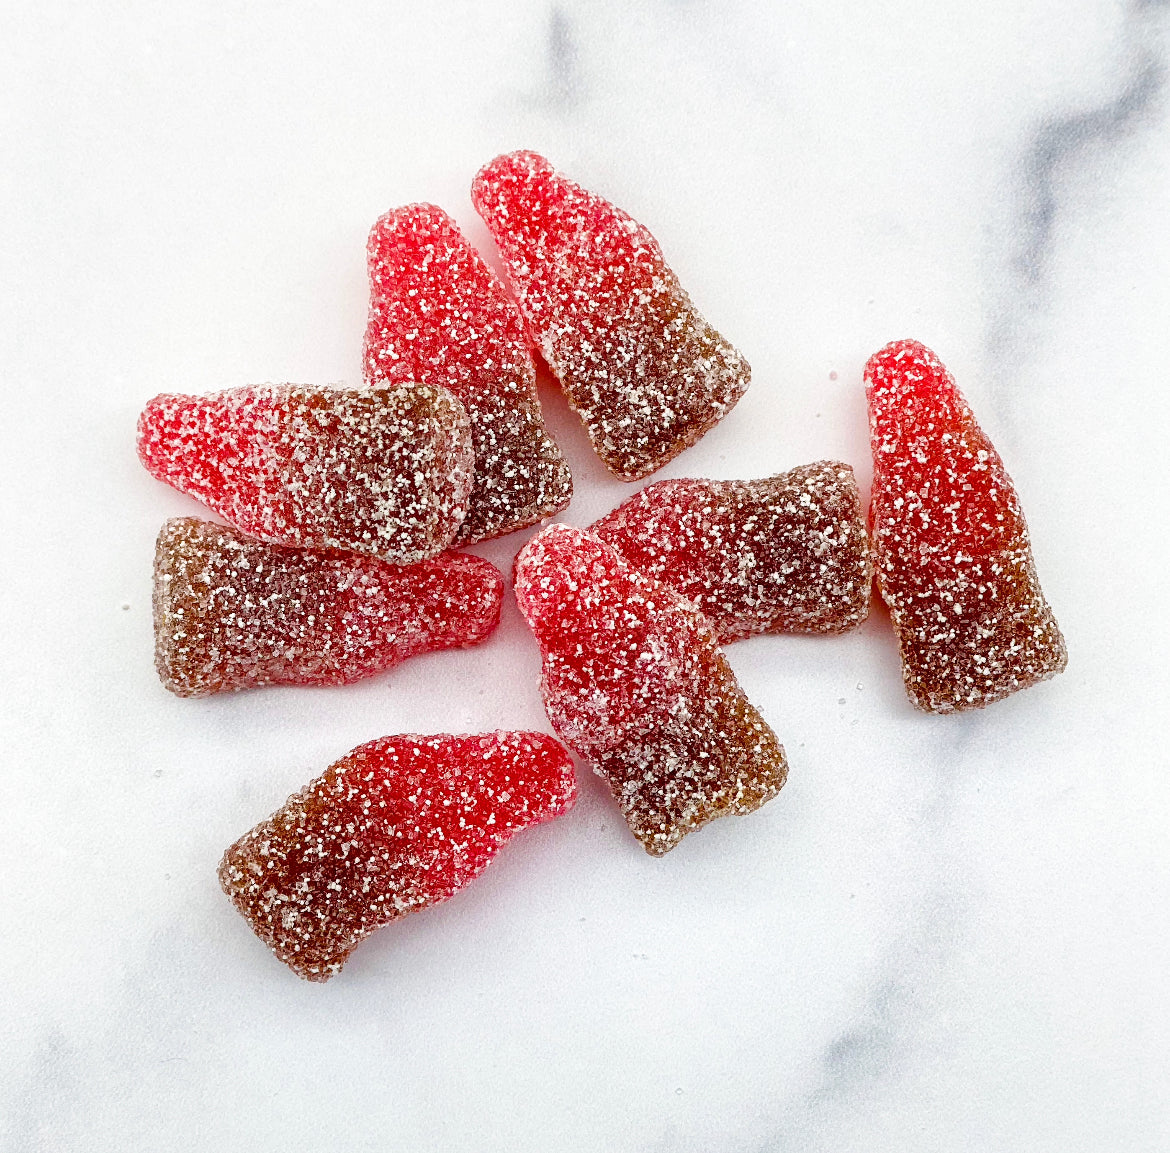 Gummi Bears - Natural – Mister Ed's Elephant Museum & Candy Emporium, gummy  bear candy